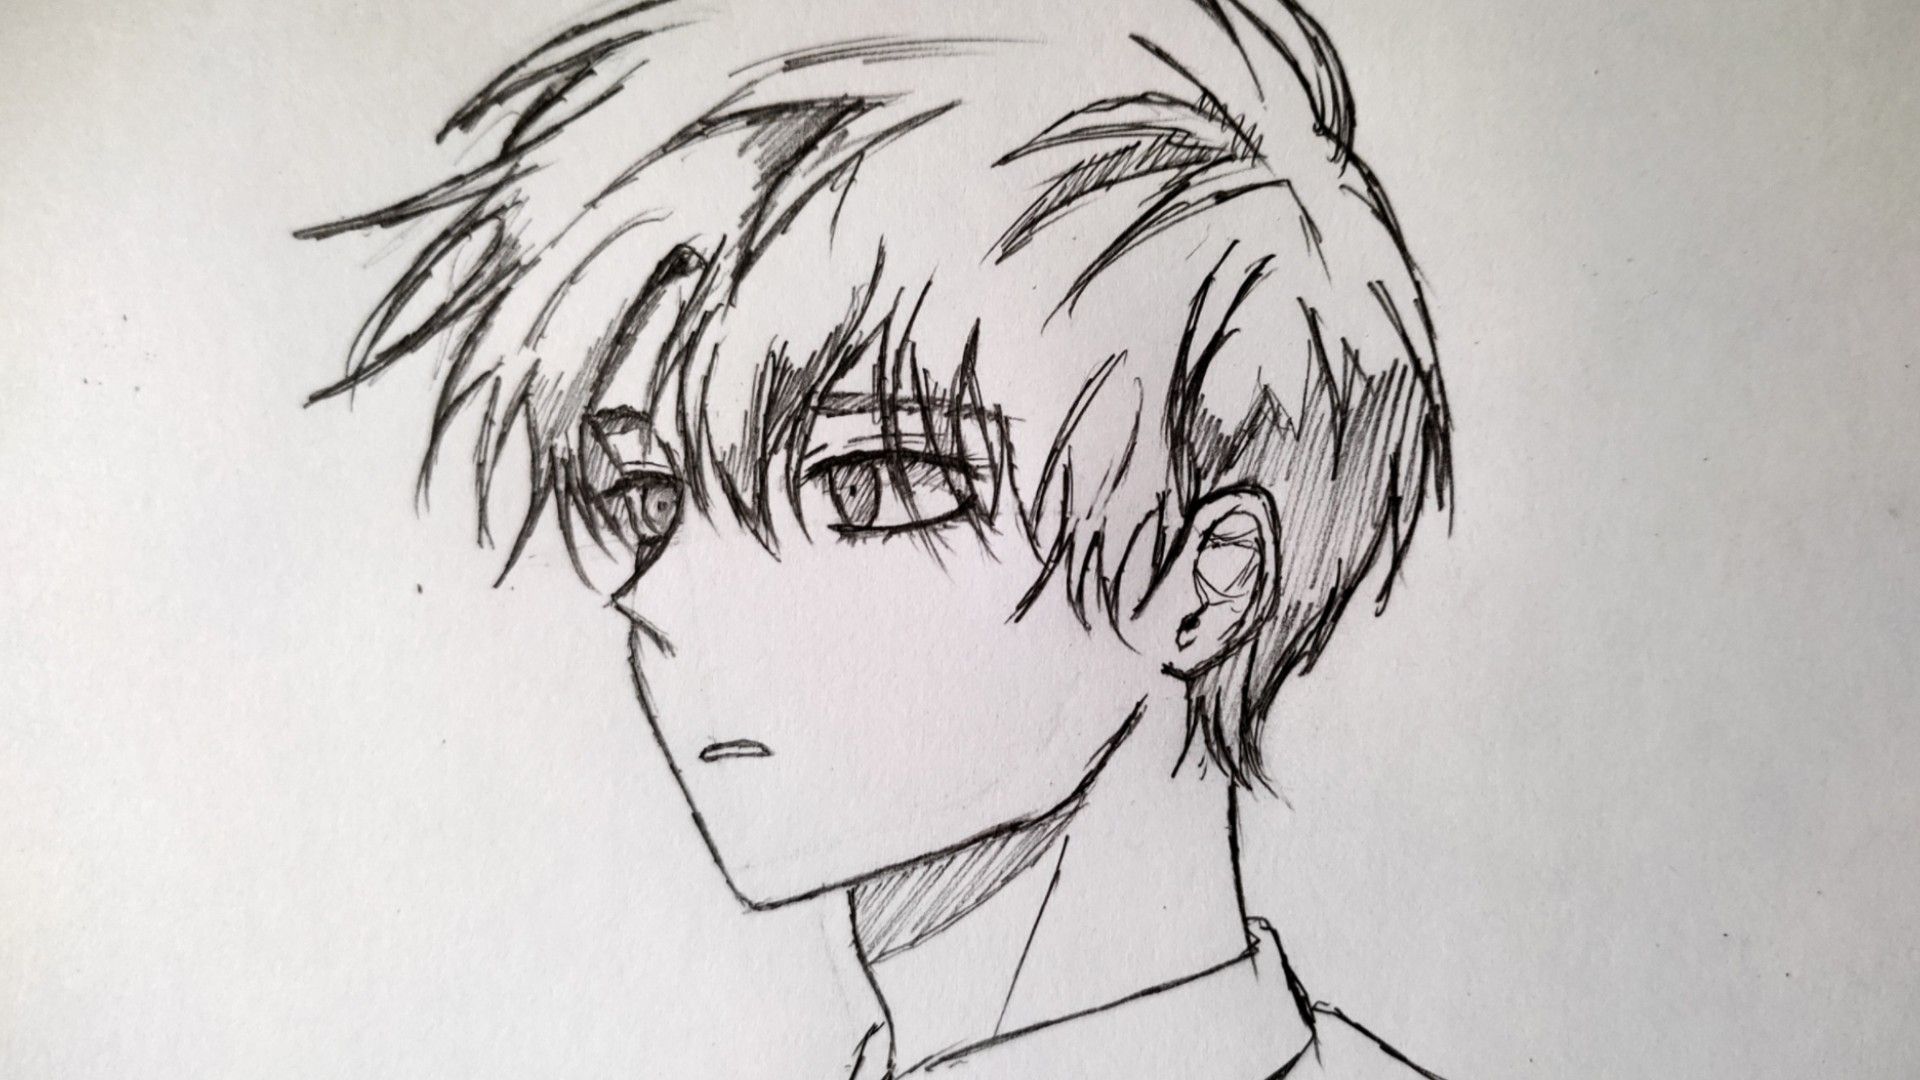 Anime boy pencil sketch by hbecca16 on DeviantArt